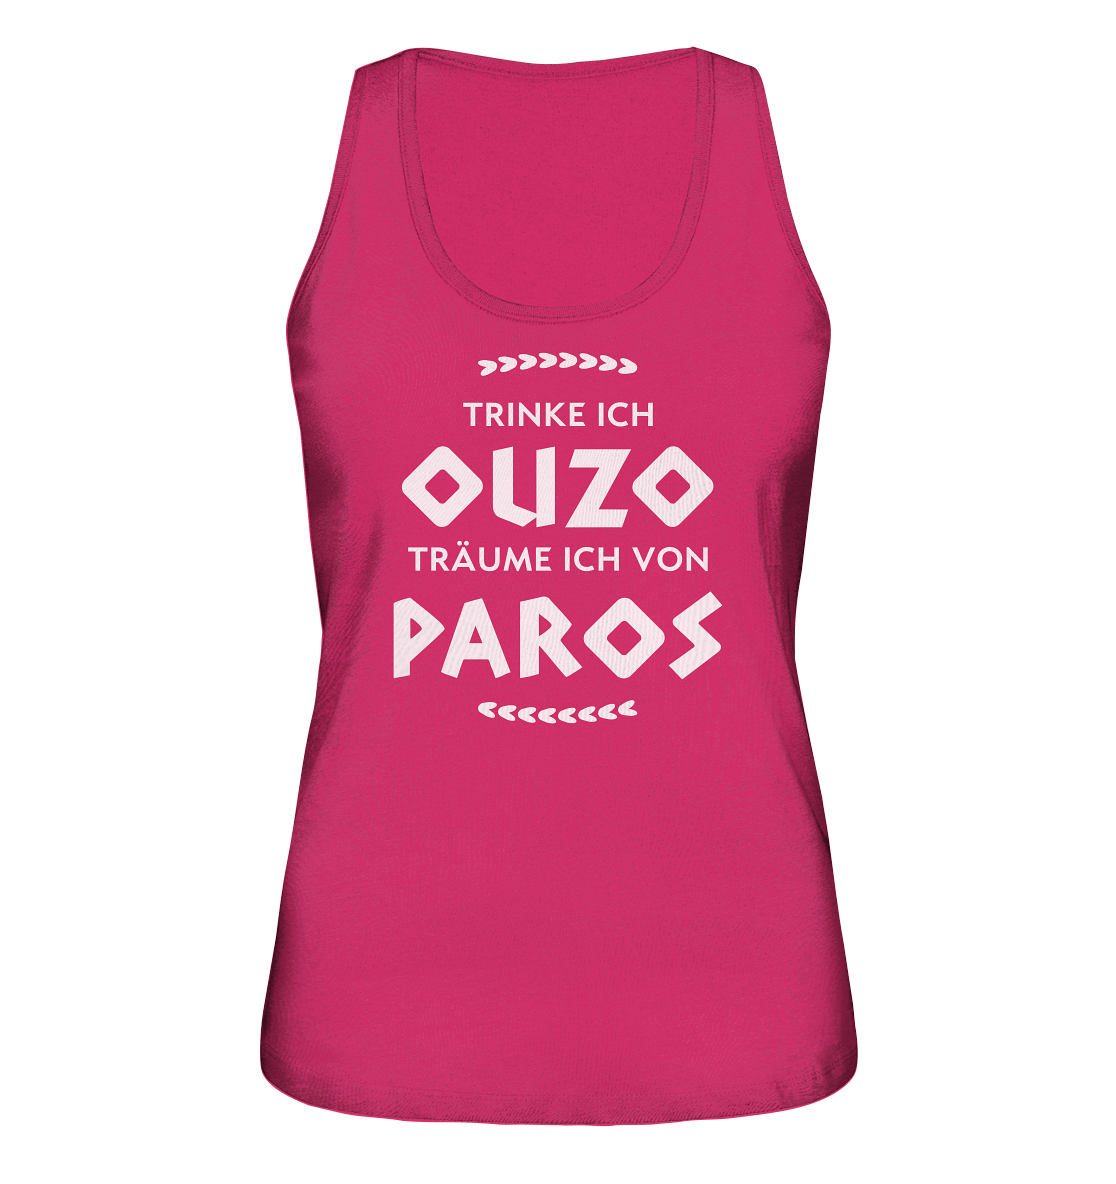 When I drink Ouzo I dream about Paros - Ladies Organic Tank Top